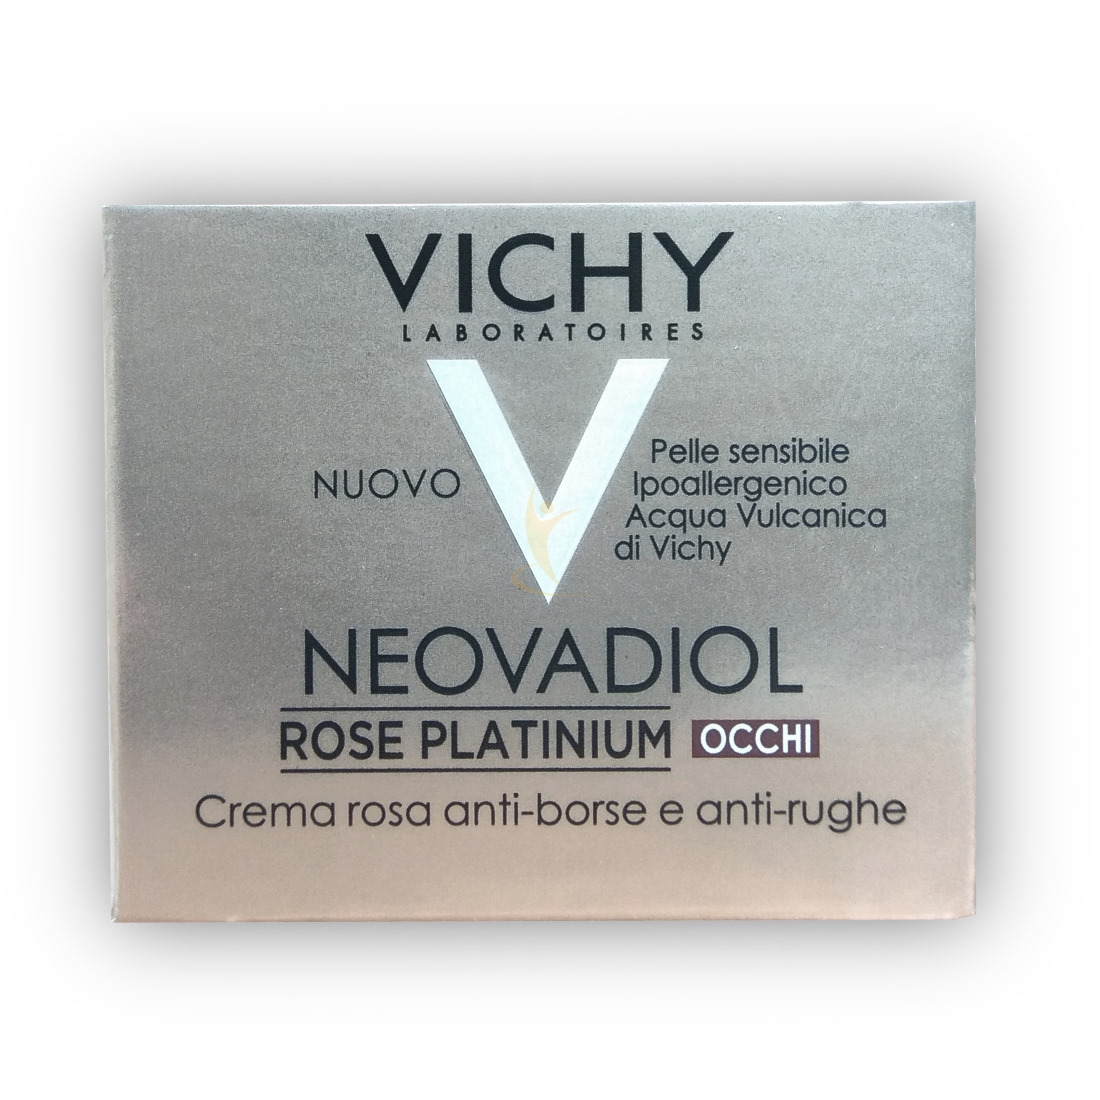 Vichy Linea Neovadiol Rose Platinum Occhi 15 Ml